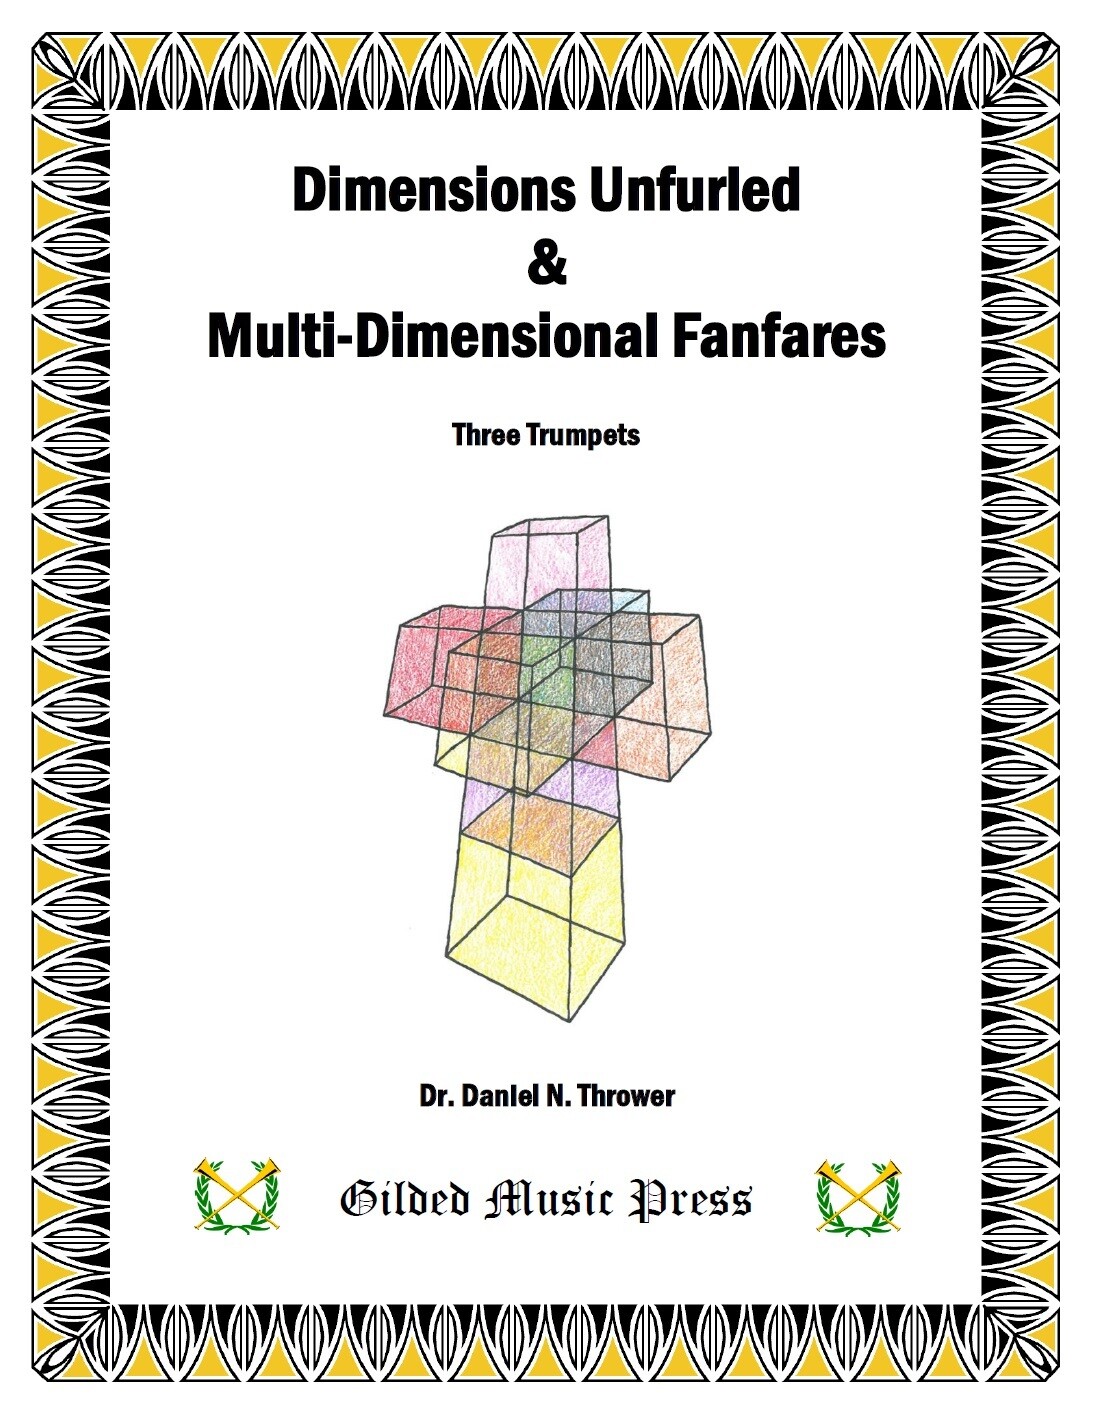 GMP 2032: Dimensions Unfurled & Multi-Dimensional Fanfares (3 tpts), Dr. Daniel Thrower